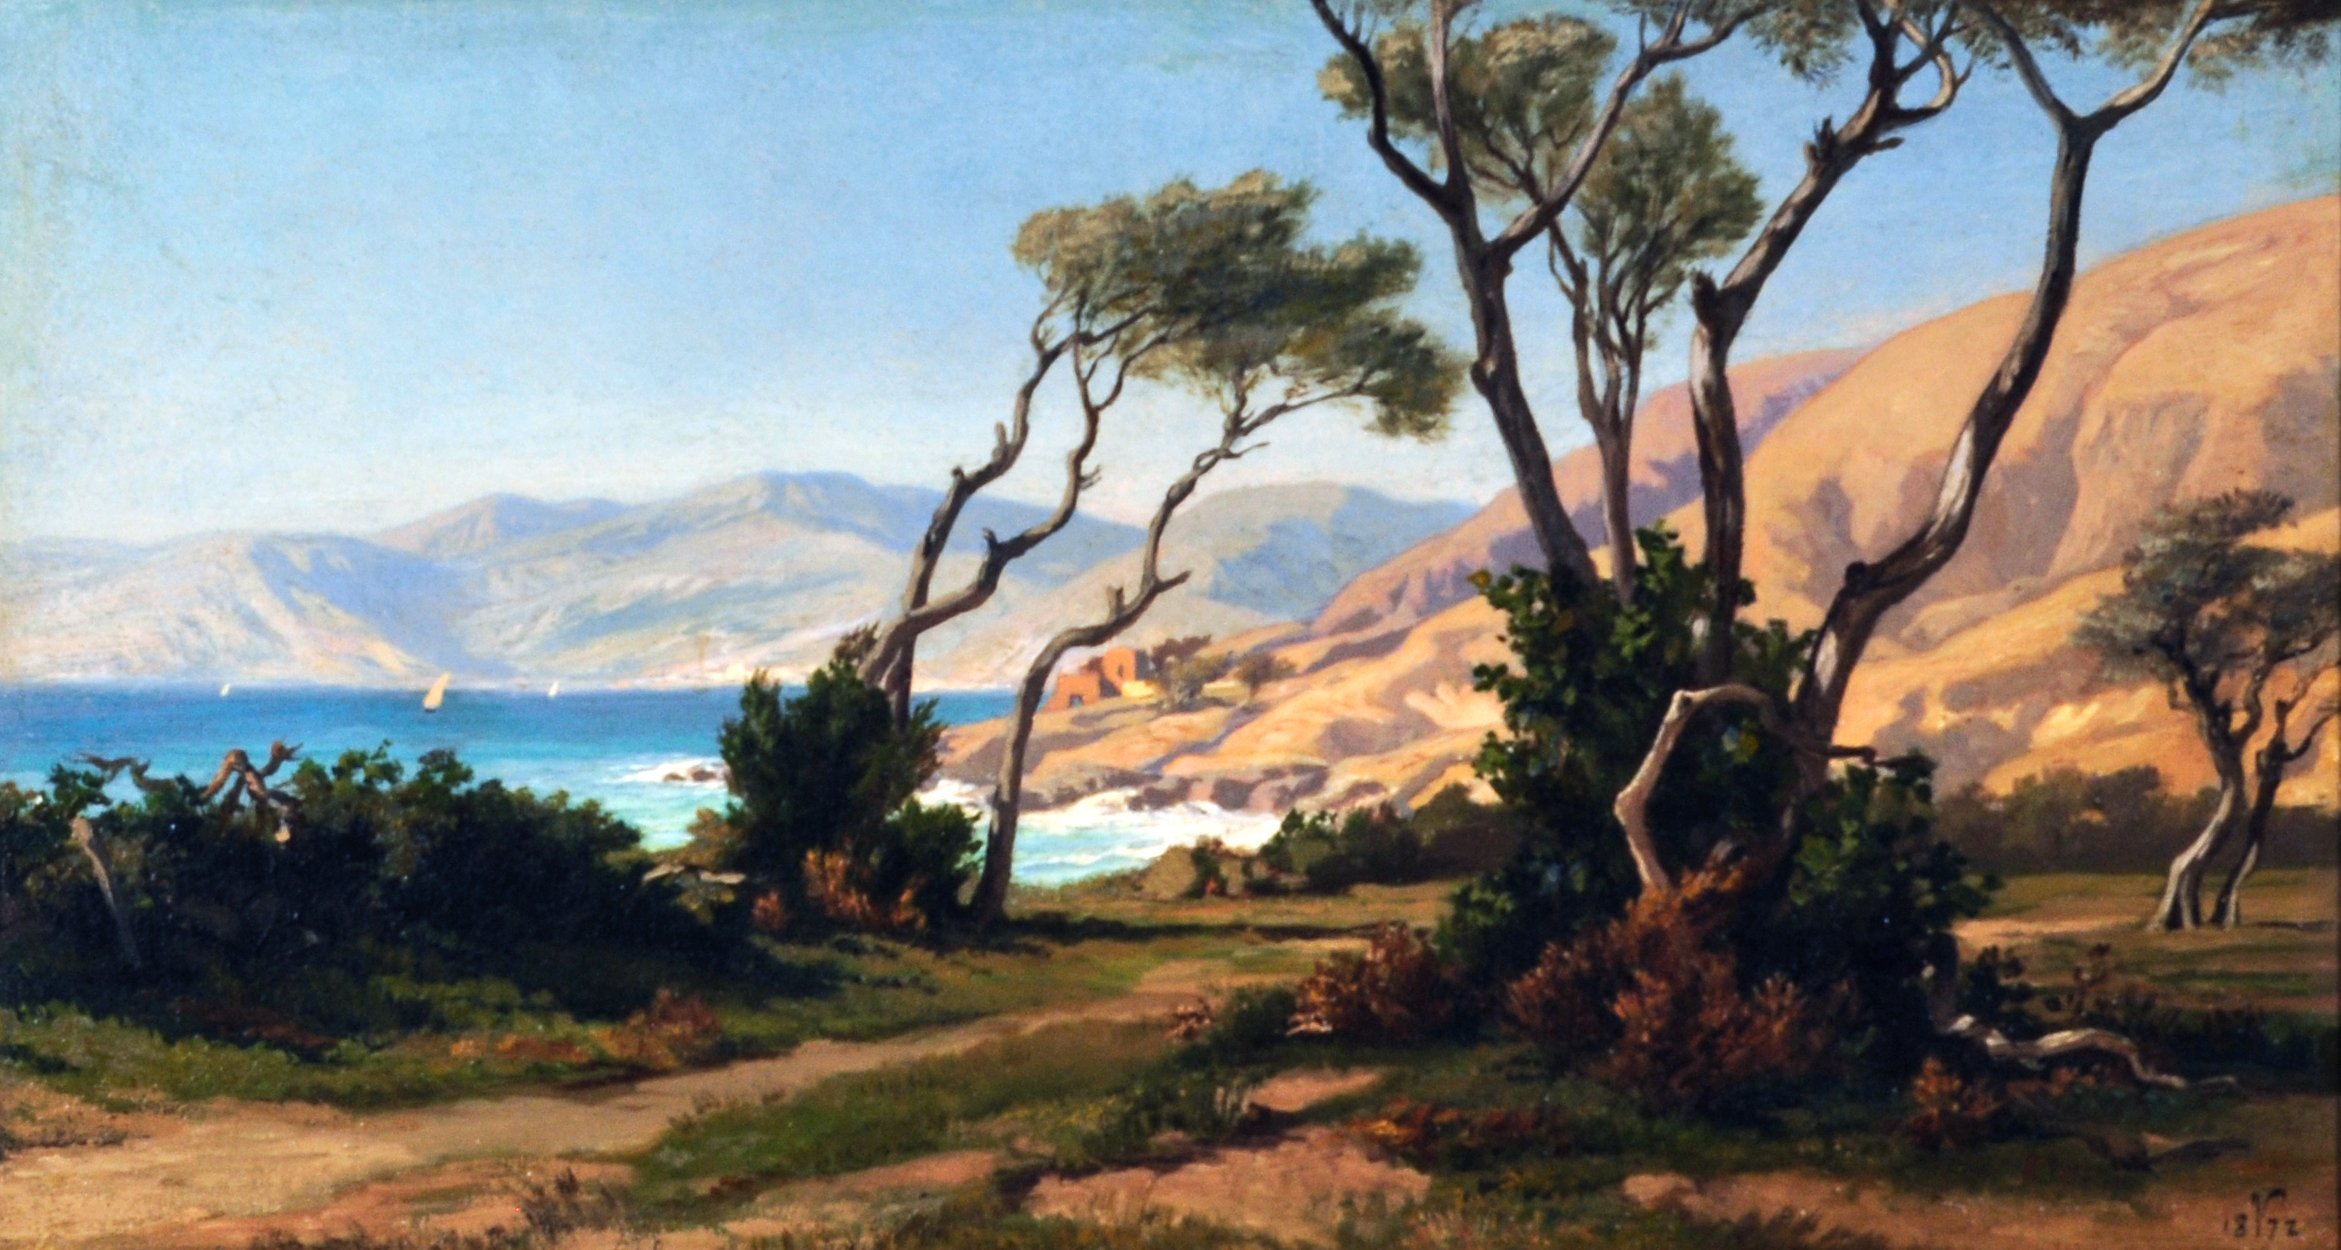  Elihu Vedder,  Windswept Olive Trees, Bordighera,  1872. Oil on canvas. The Jean and Graham Devoe Williford Charitable Trust 